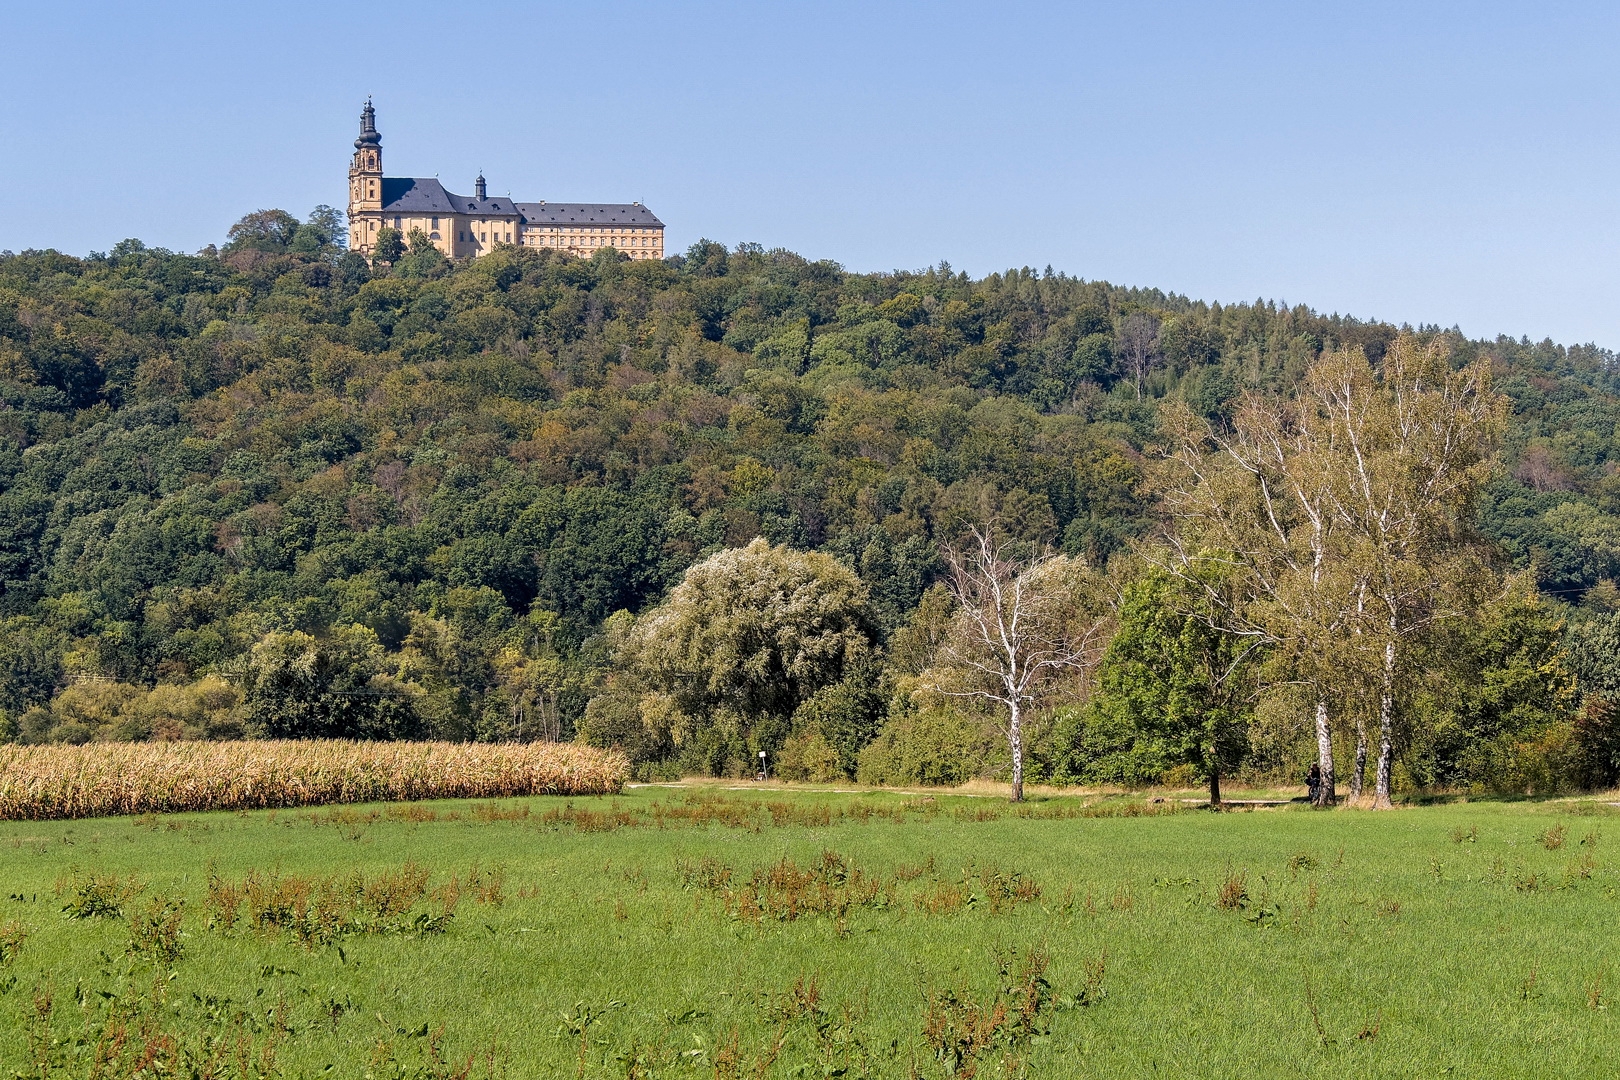 Kloster Banz